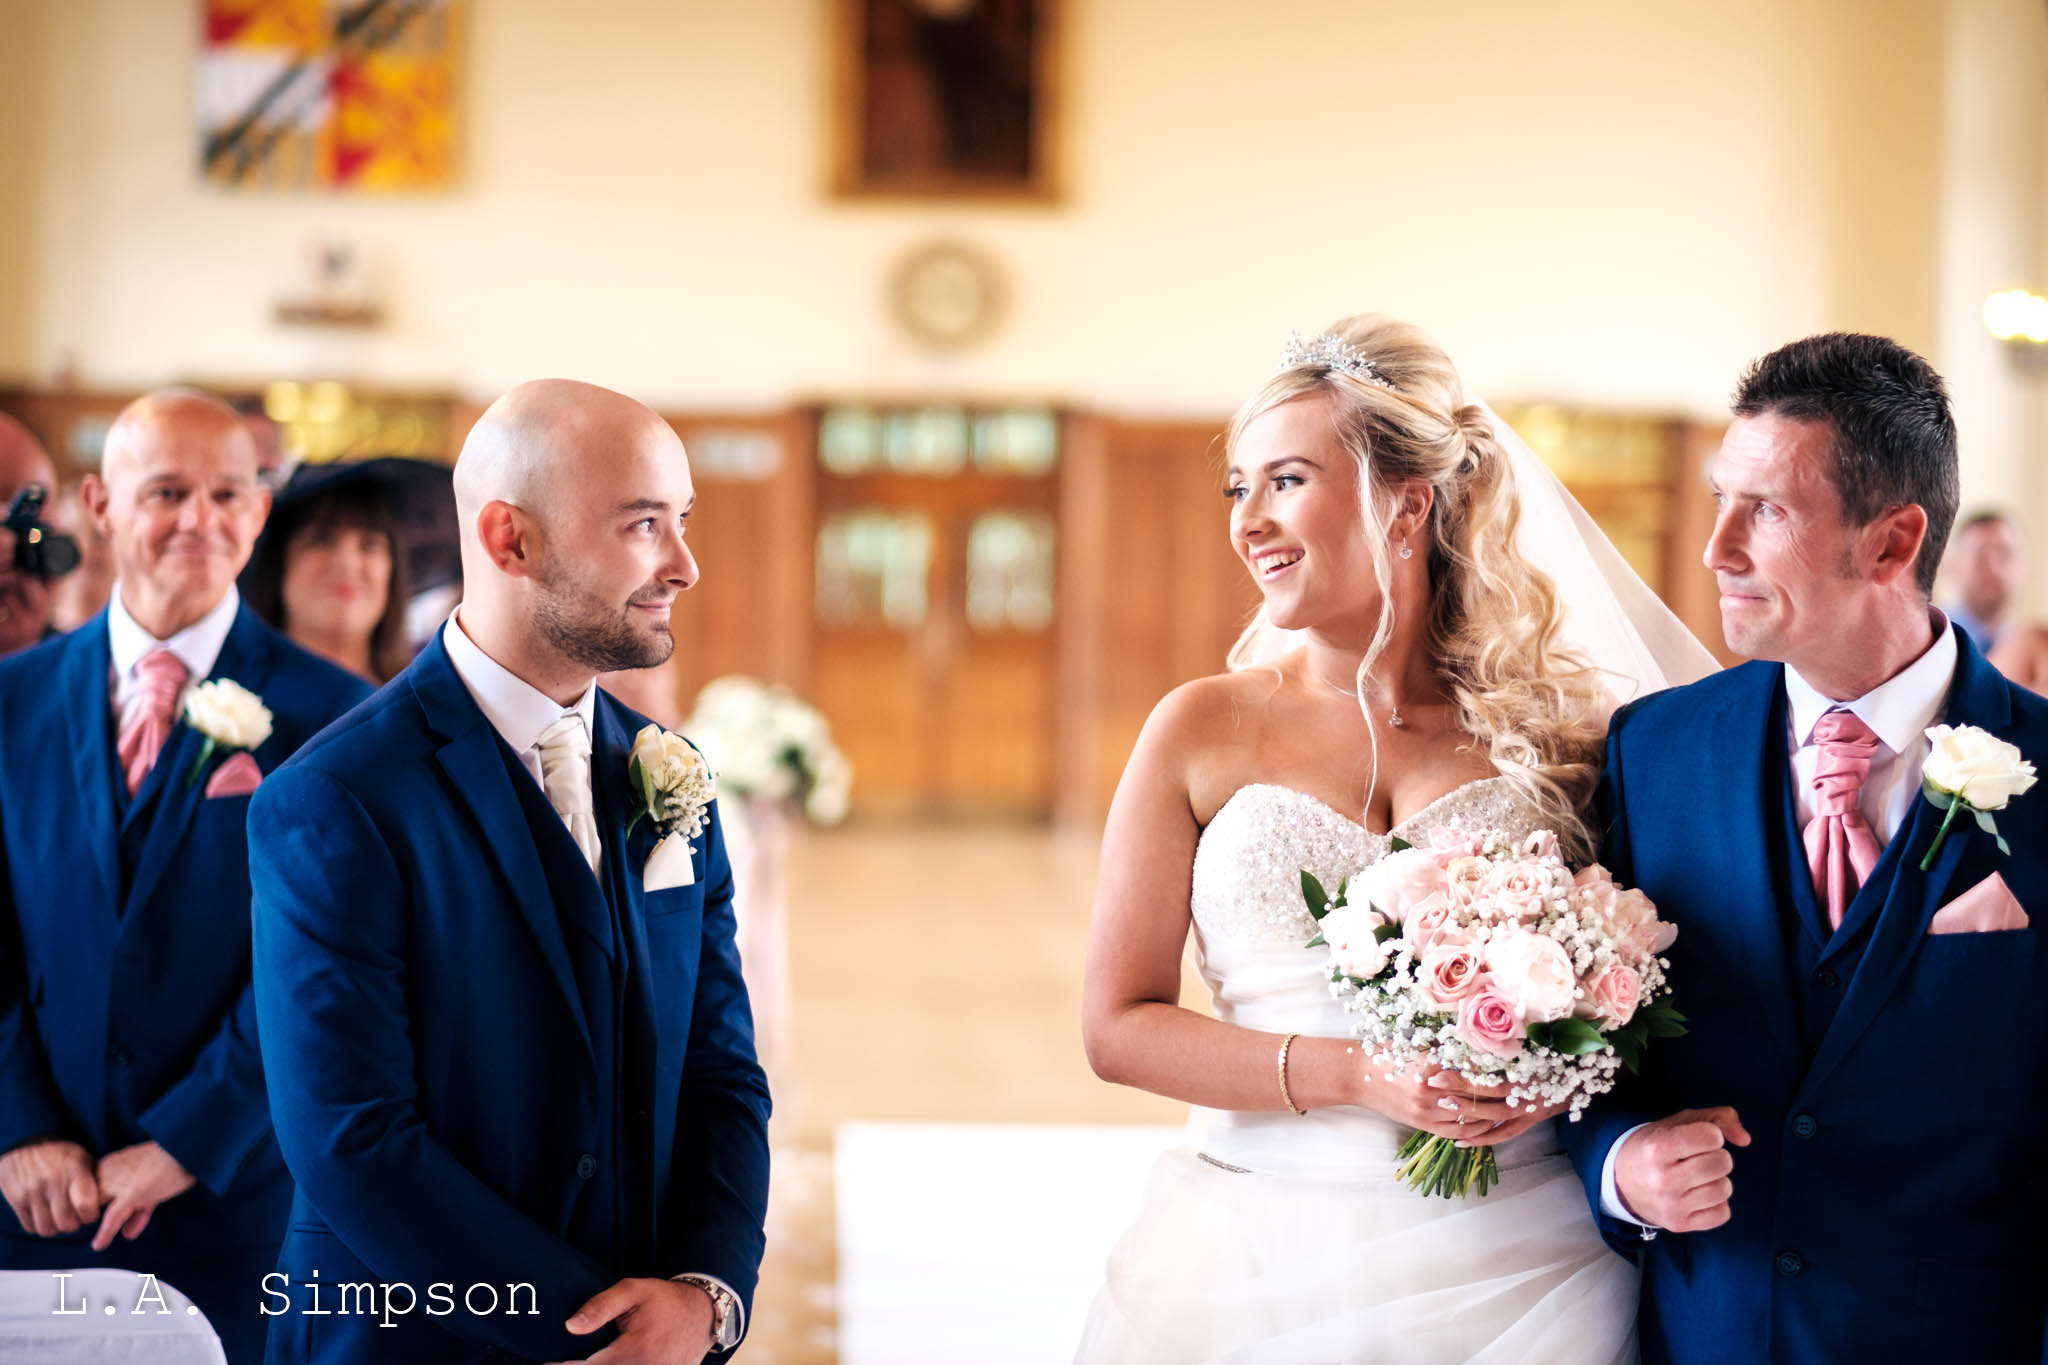 Lee_Simpson_Photography_Bolton_School_Wedding15.jpg